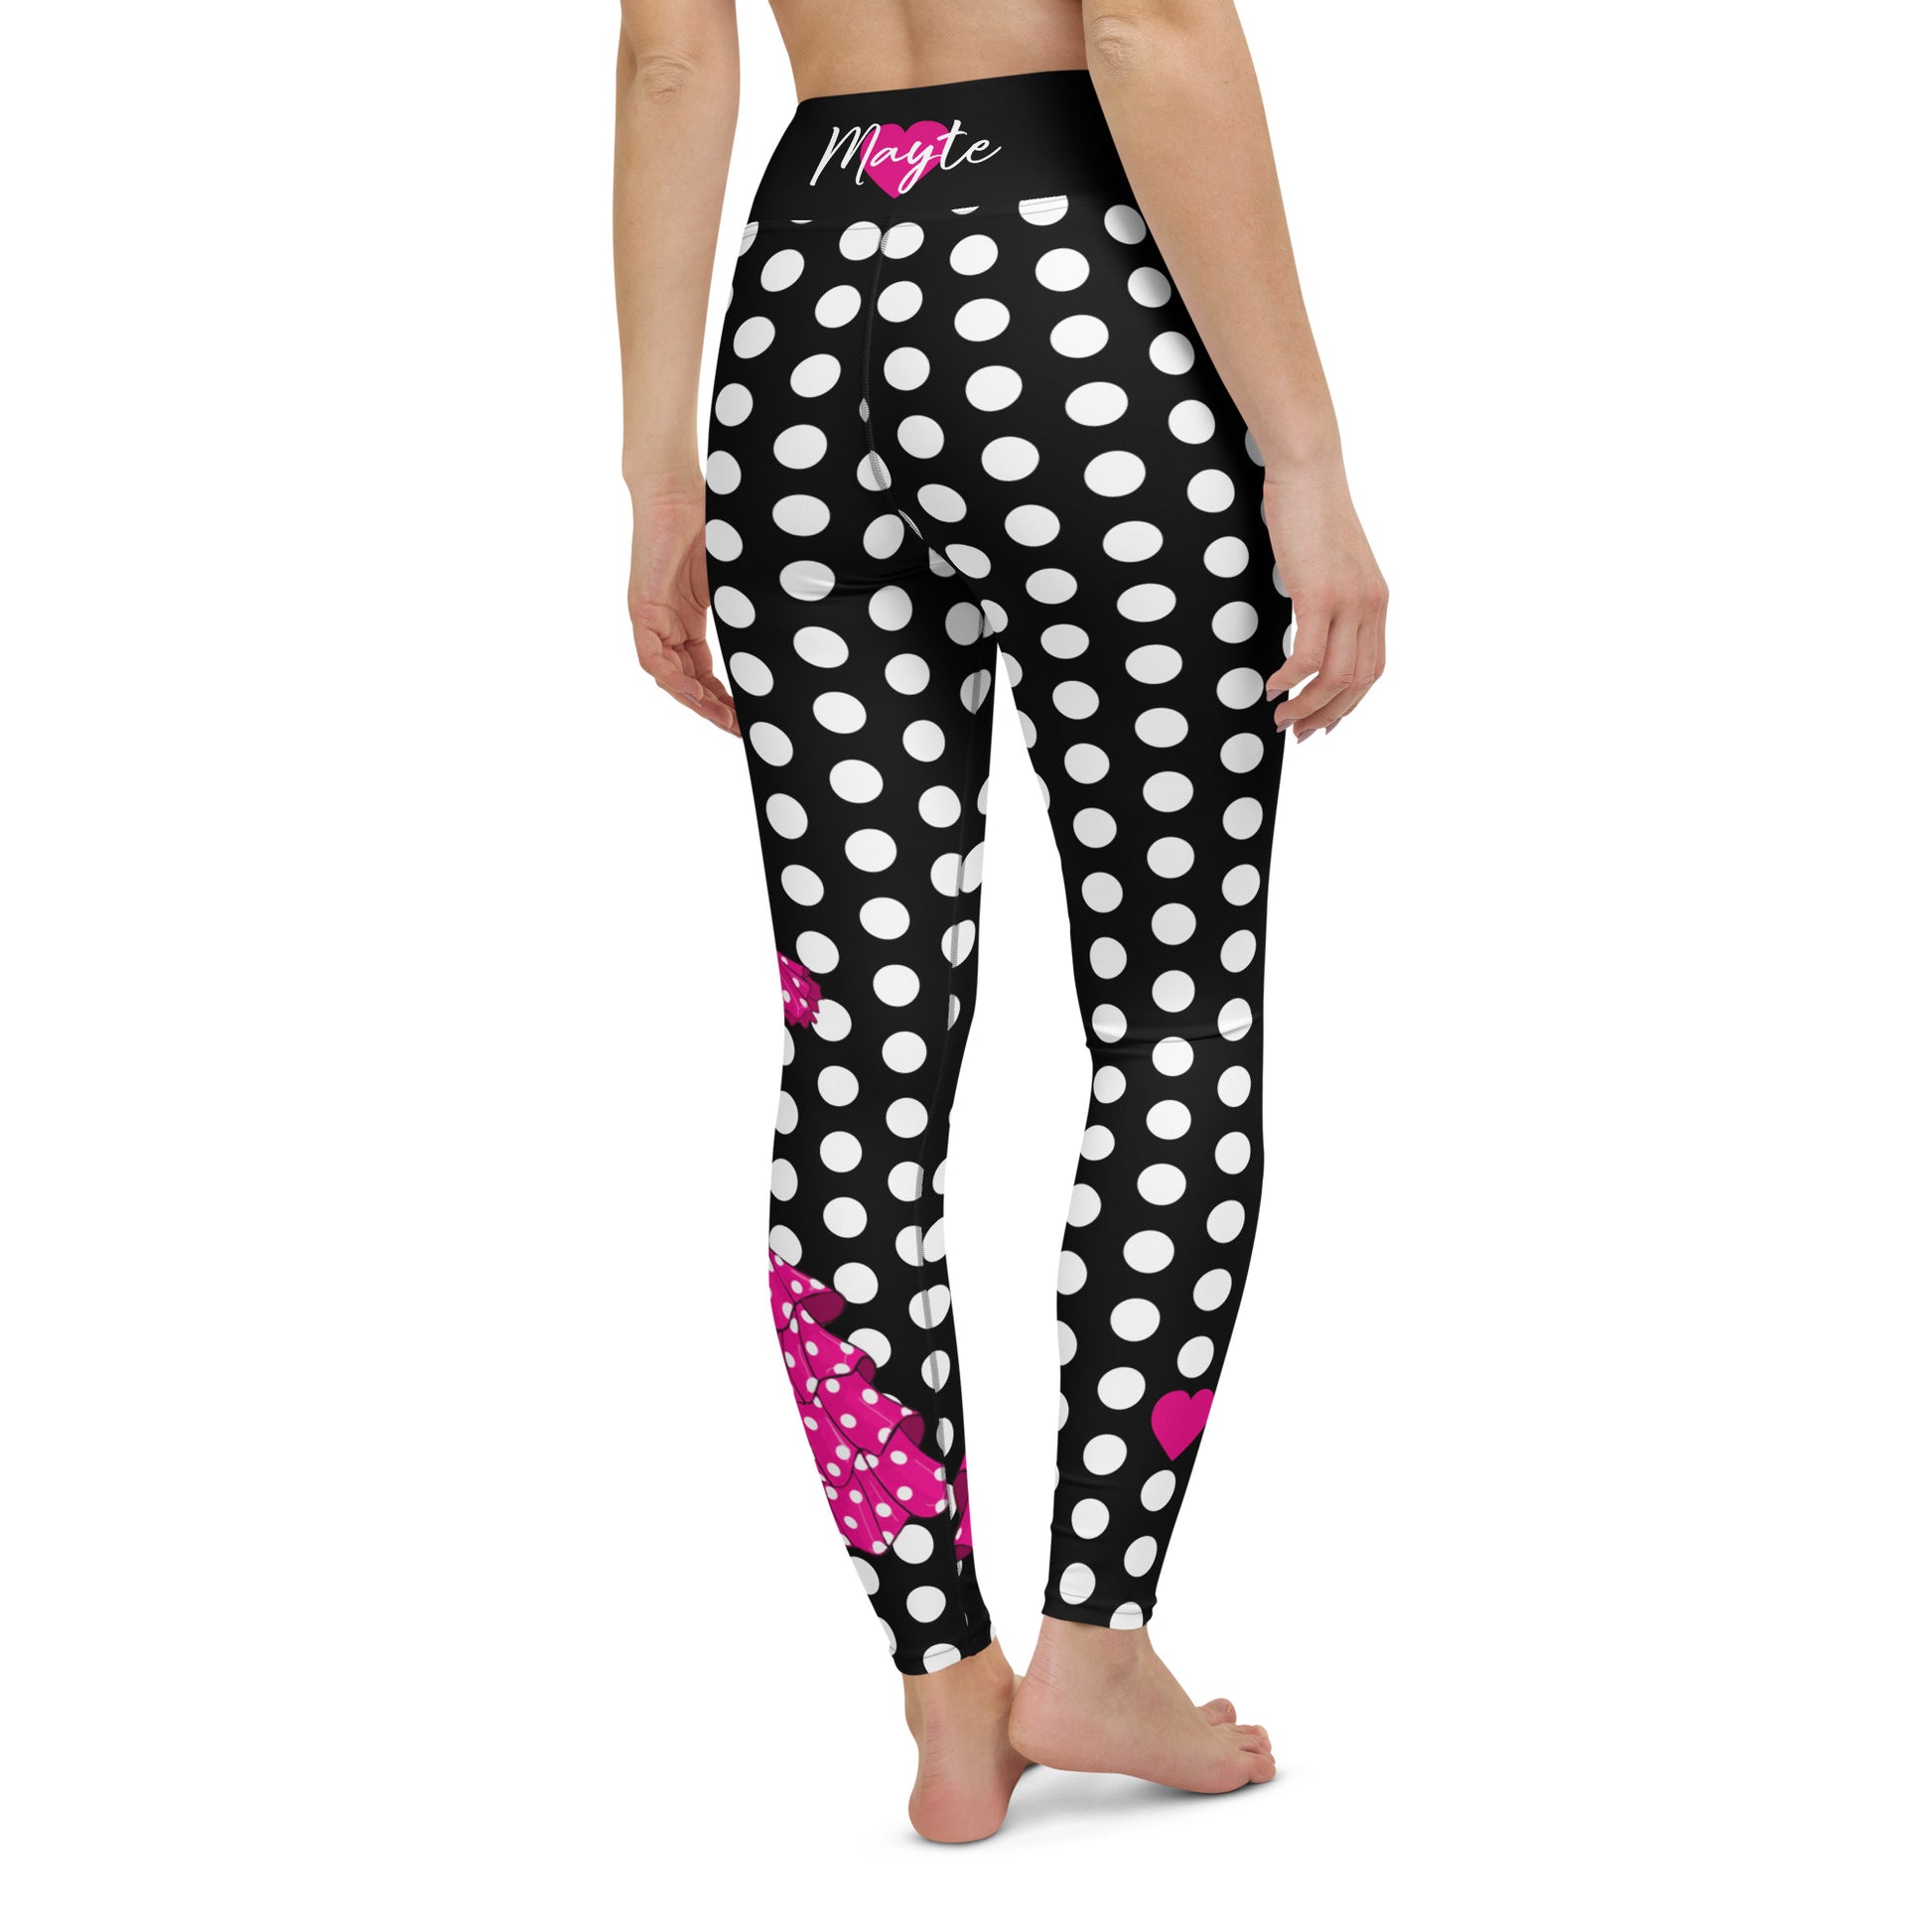 a woman wearing black and white polka dot leggings